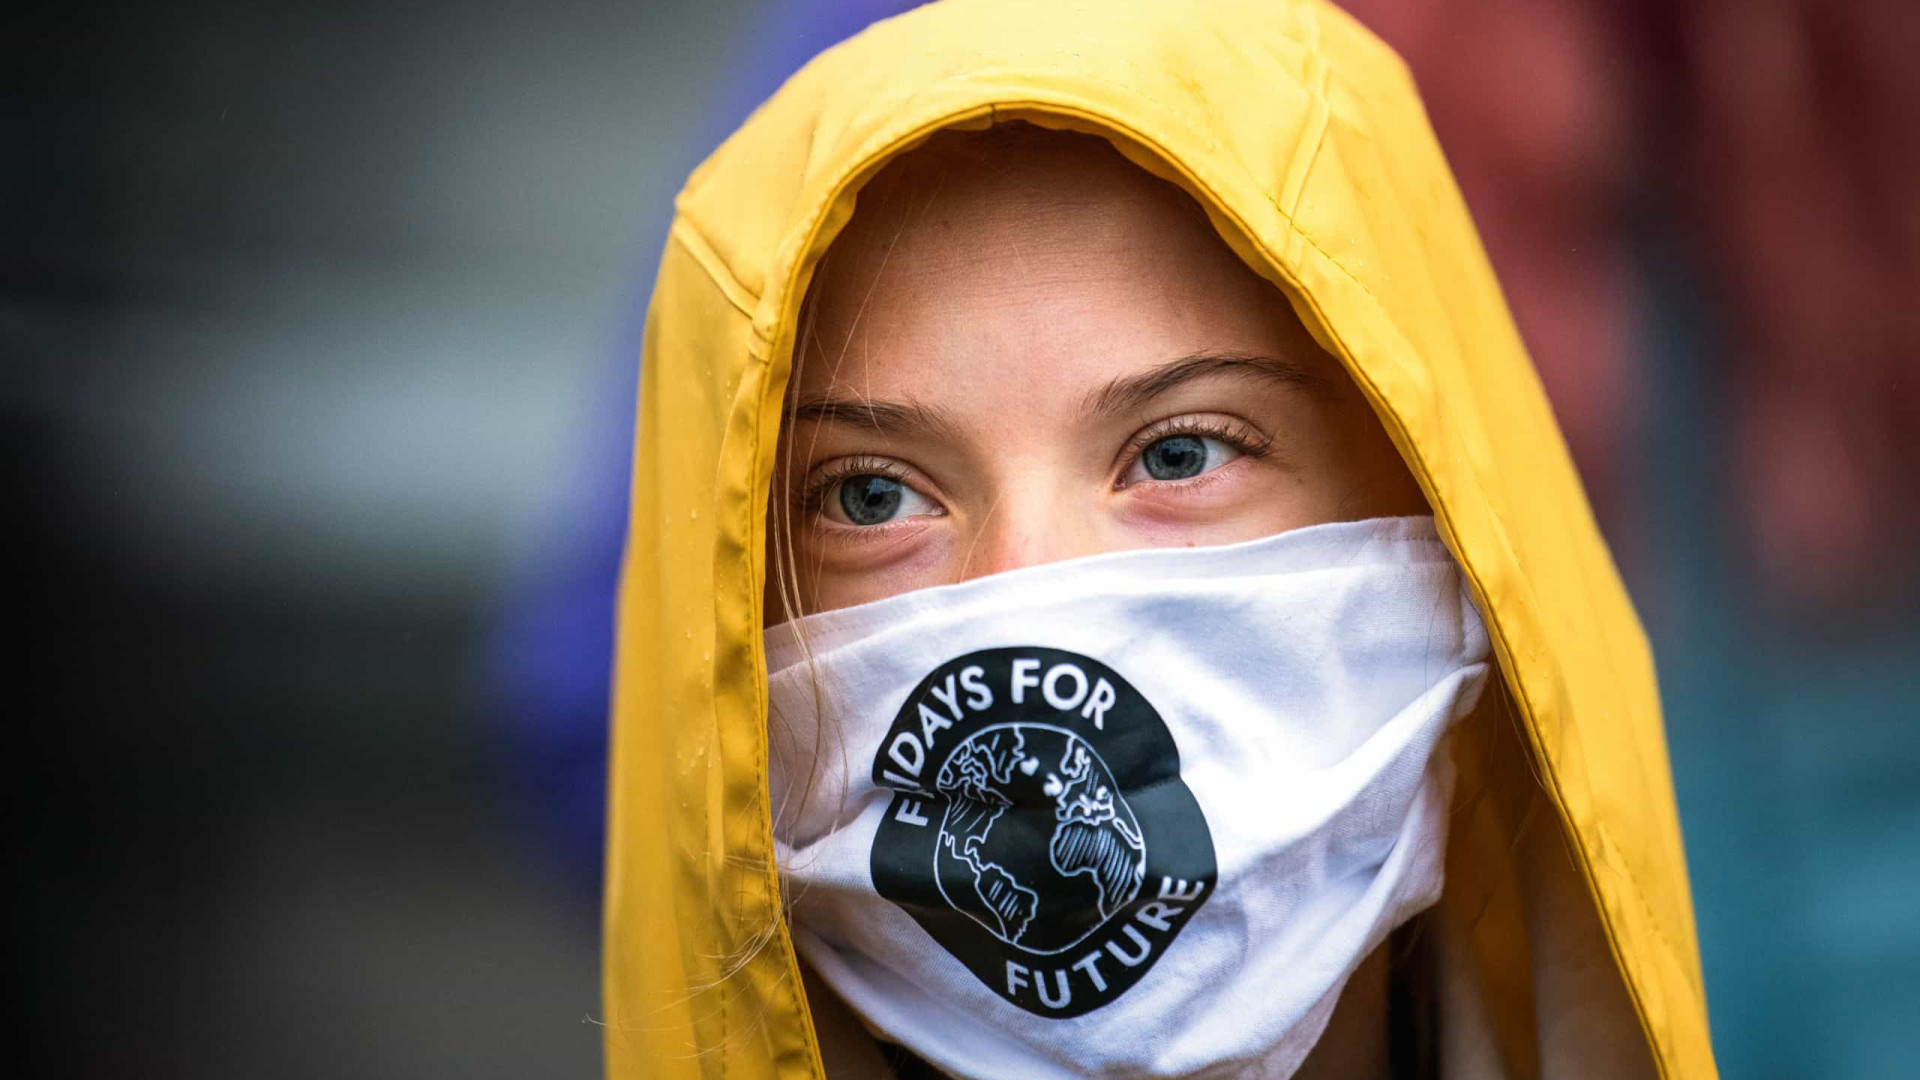 Crise climática: Greta Thunberg critica hipocrisia dos líderes mundiais